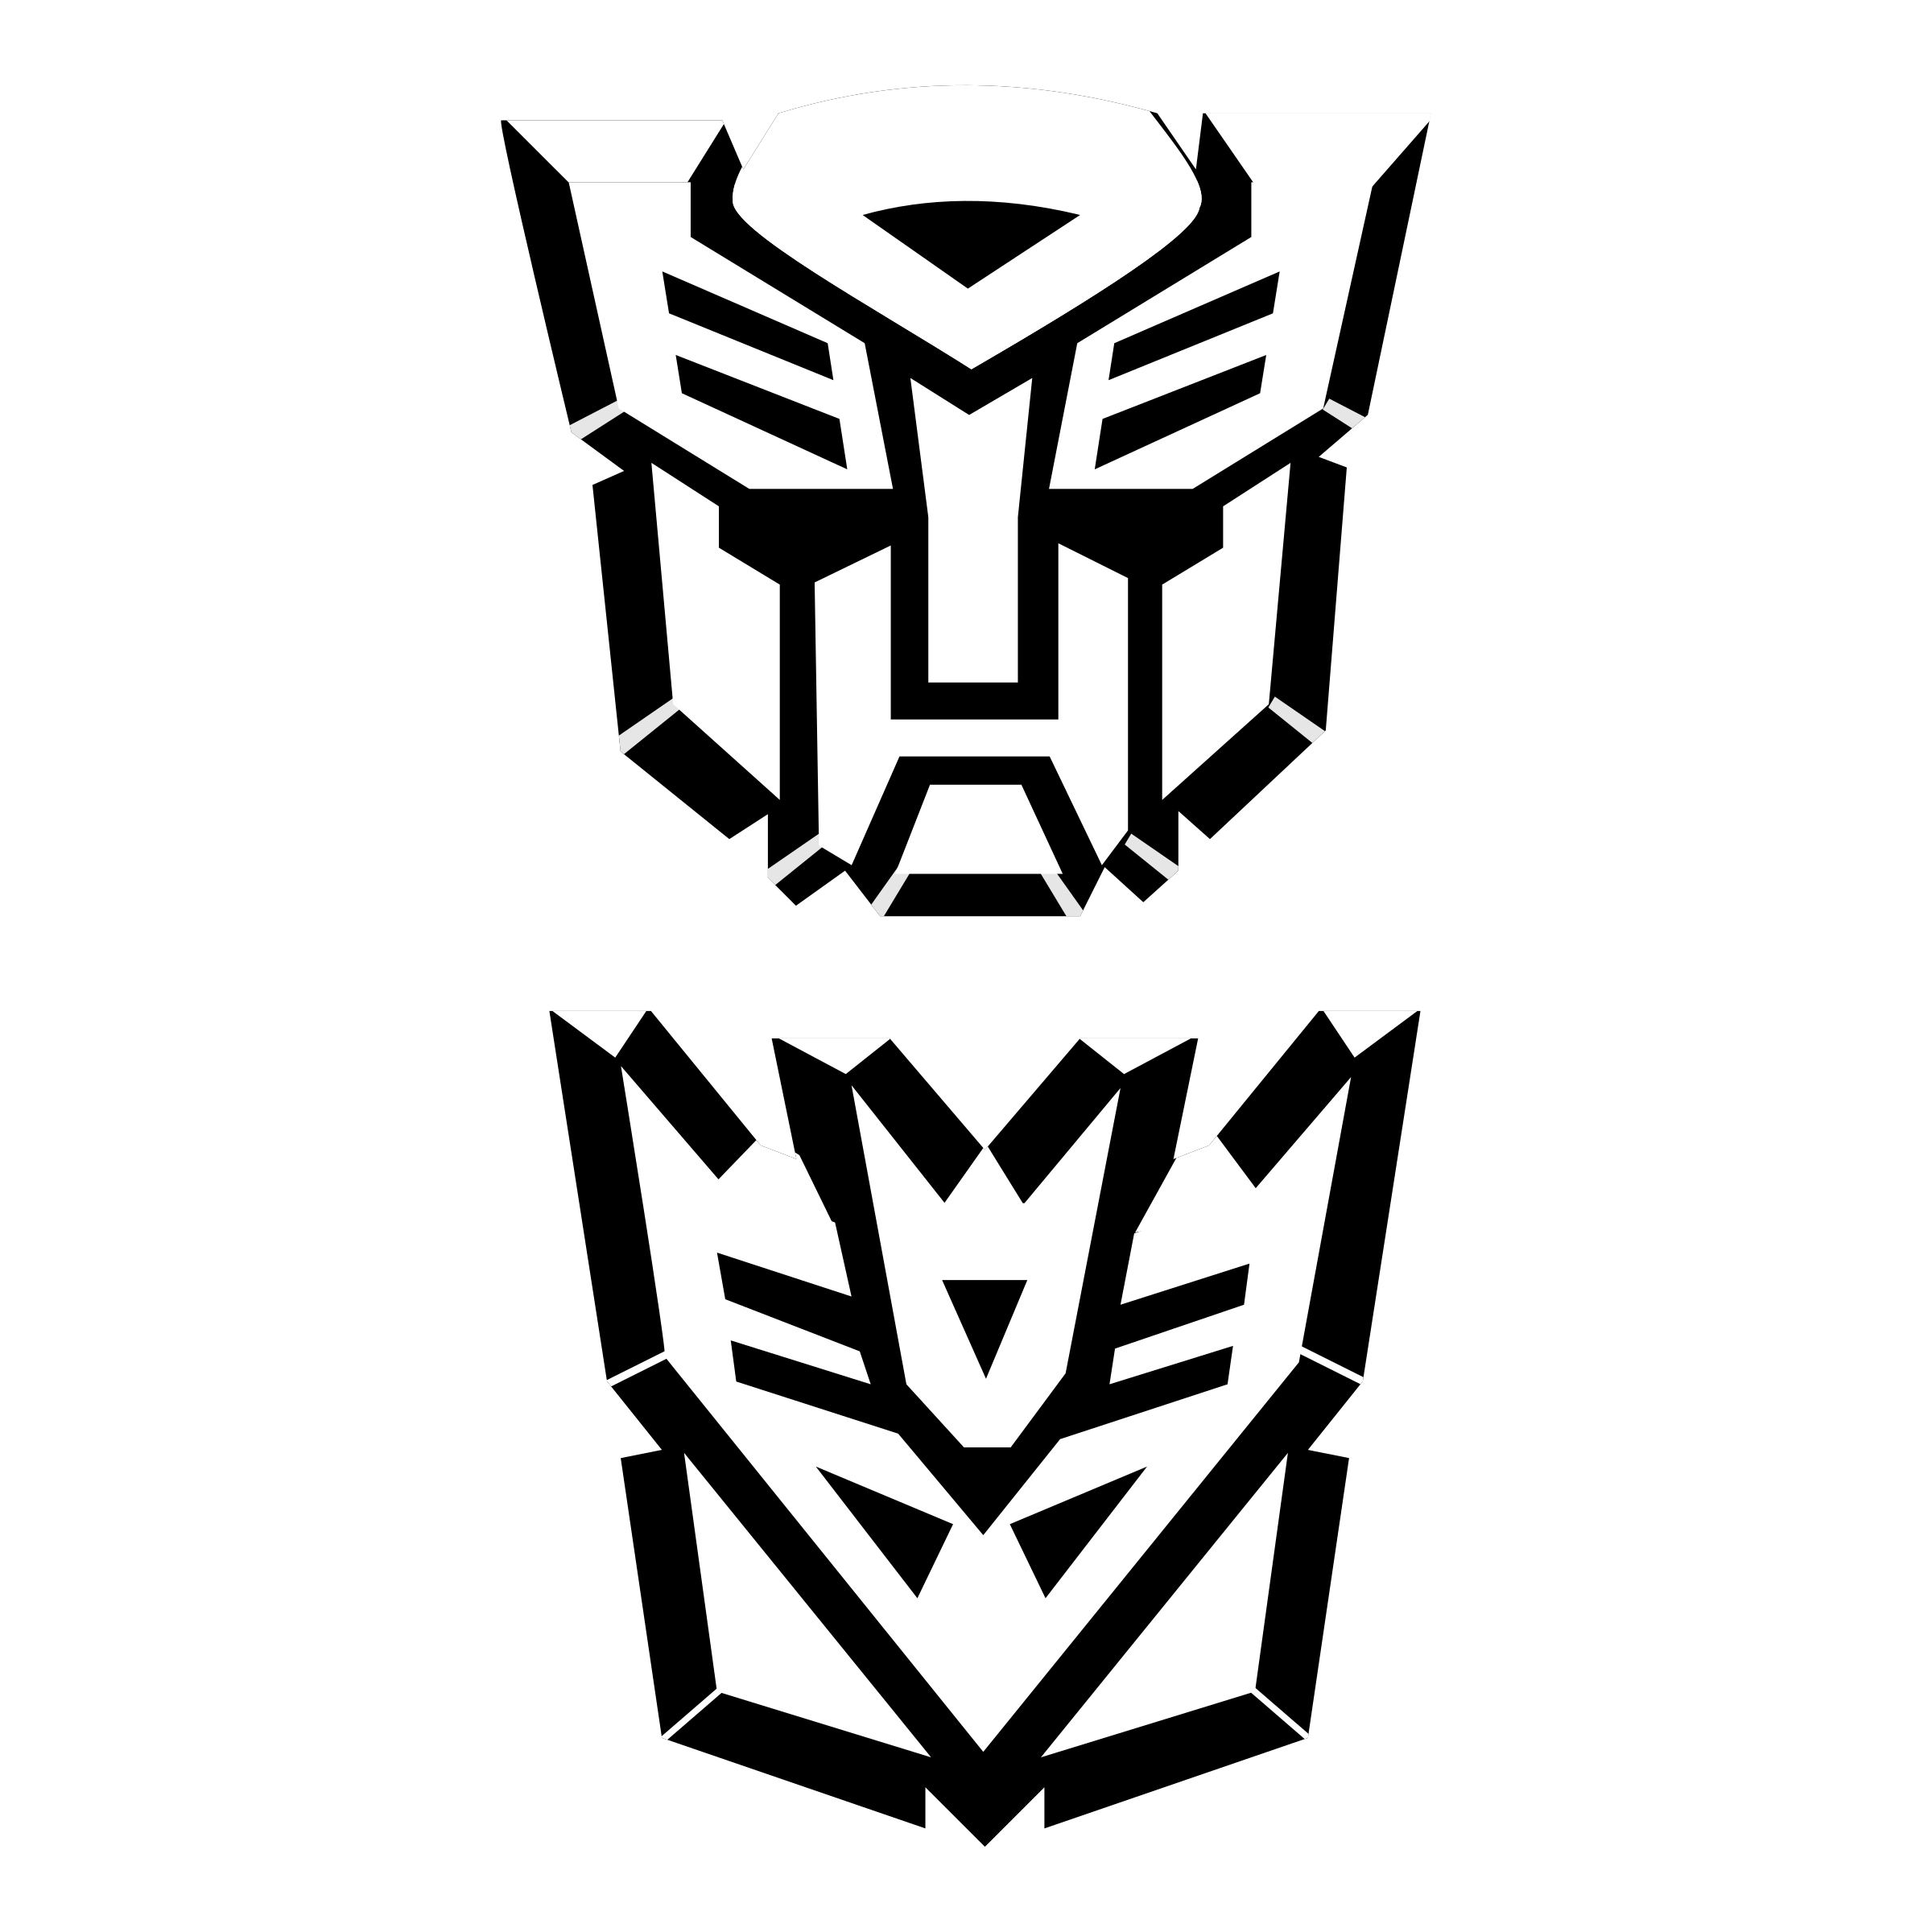 Transformers Black and White Logo - Transformers Logo PNG Transparent & SVG Vector - Freebie Supply